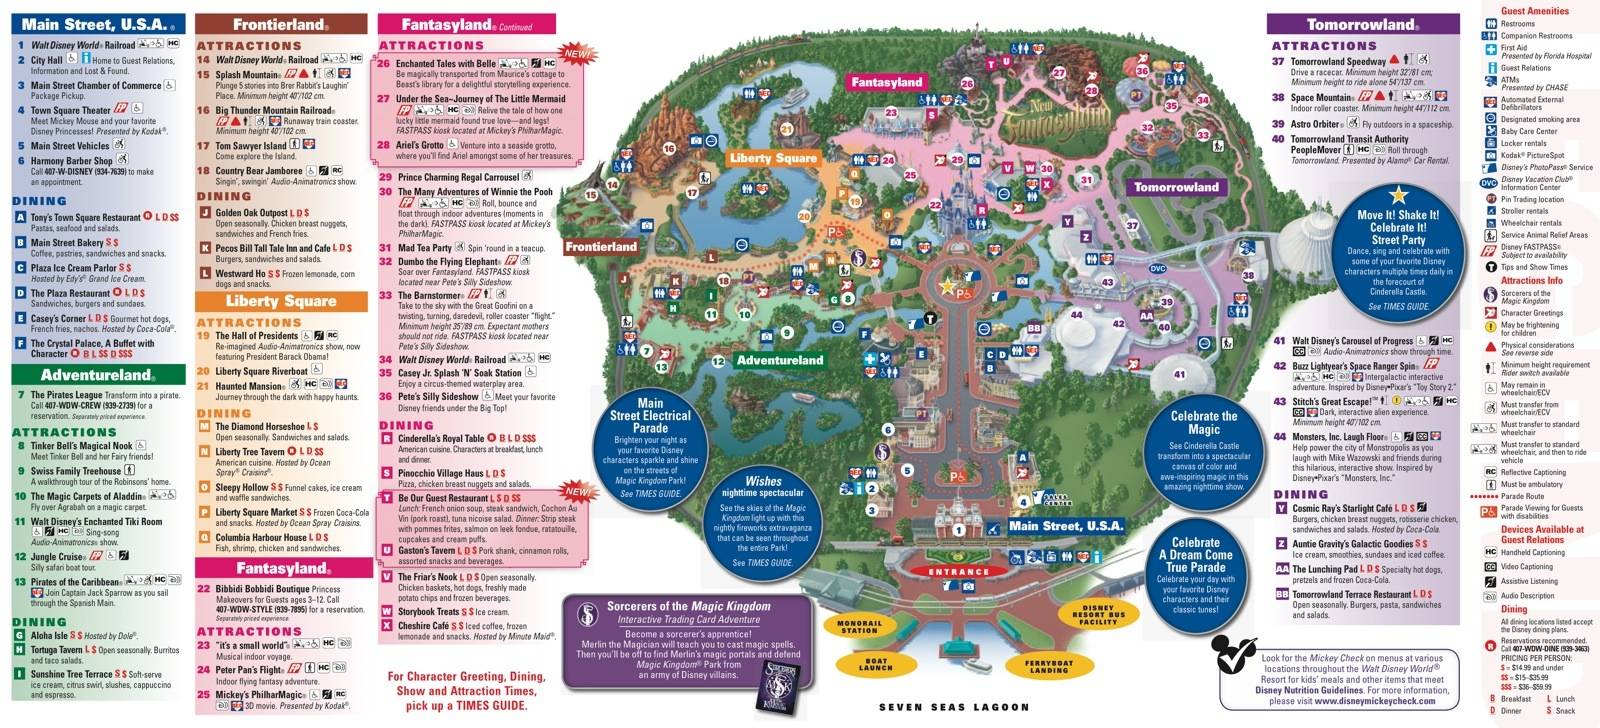 New Fantasyland on the Magic Kingdom guide map